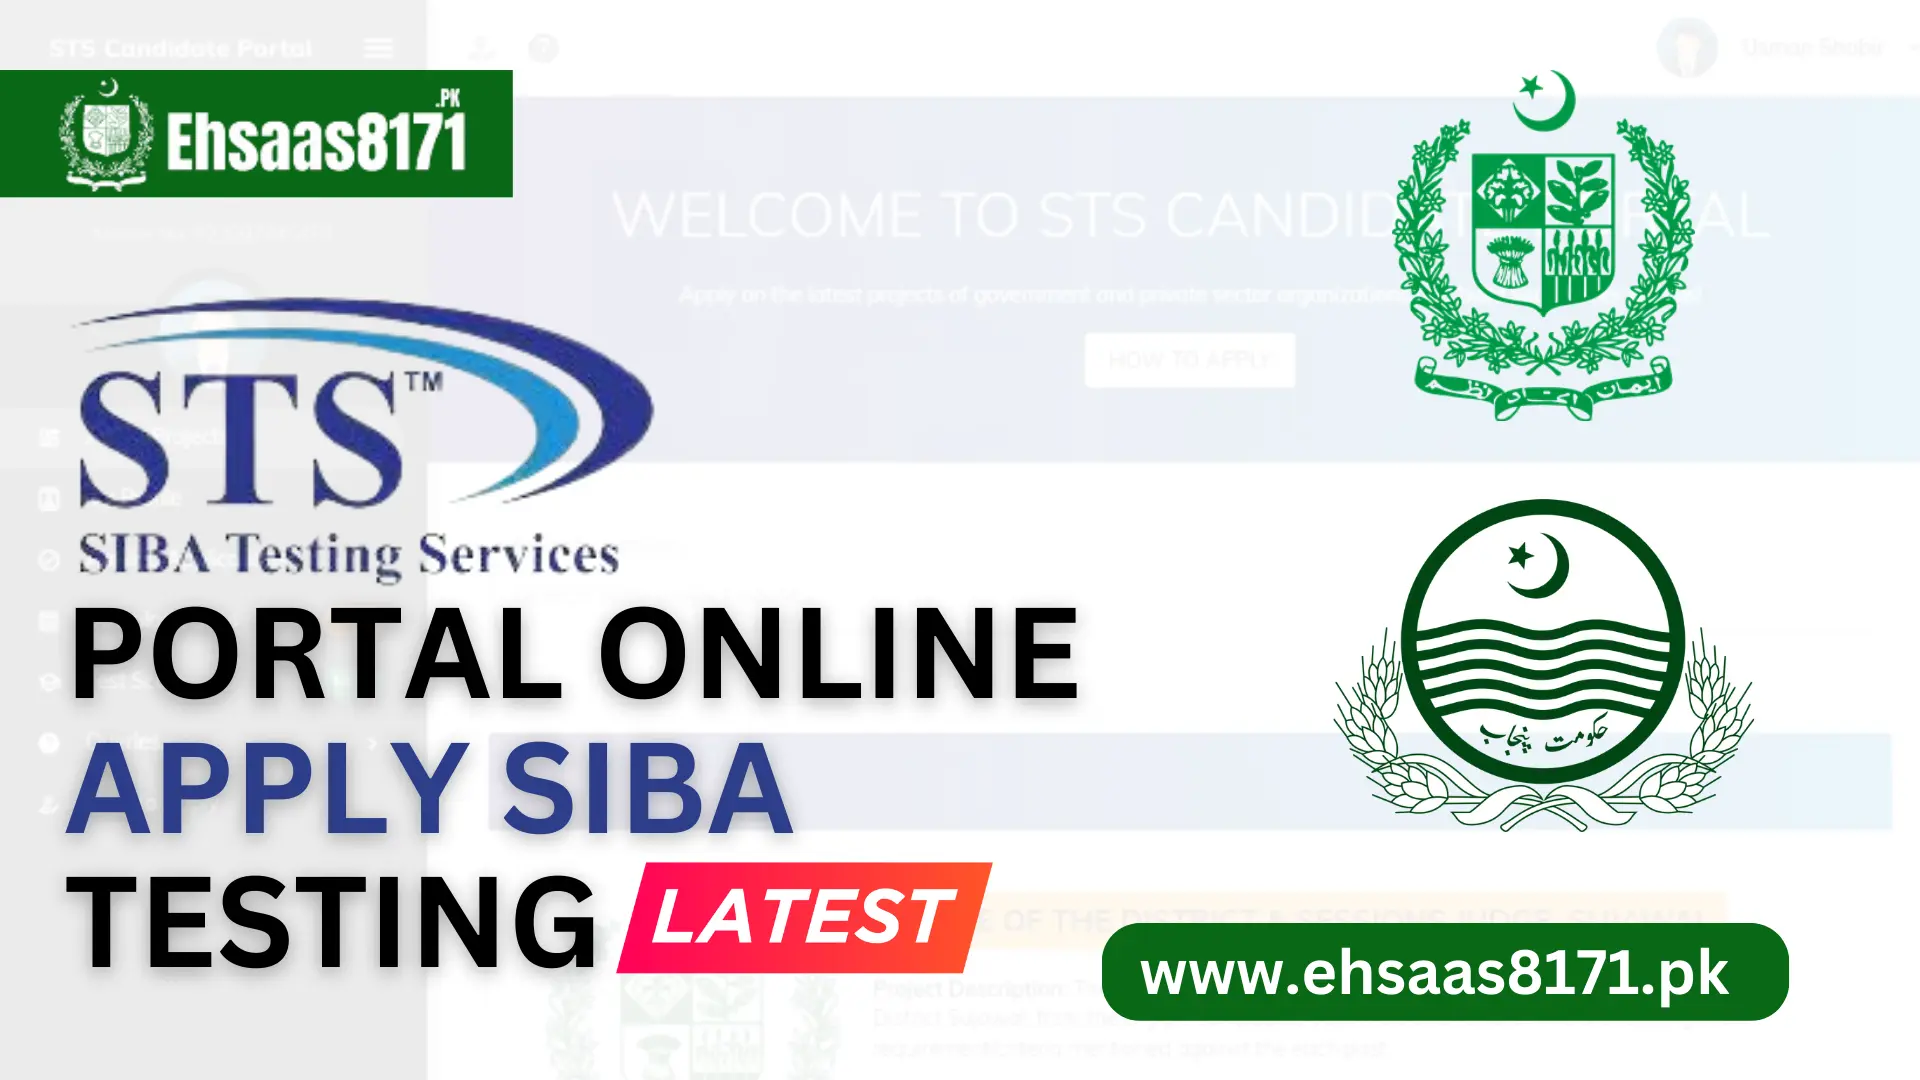 STS portal online apply Siba testing service latest